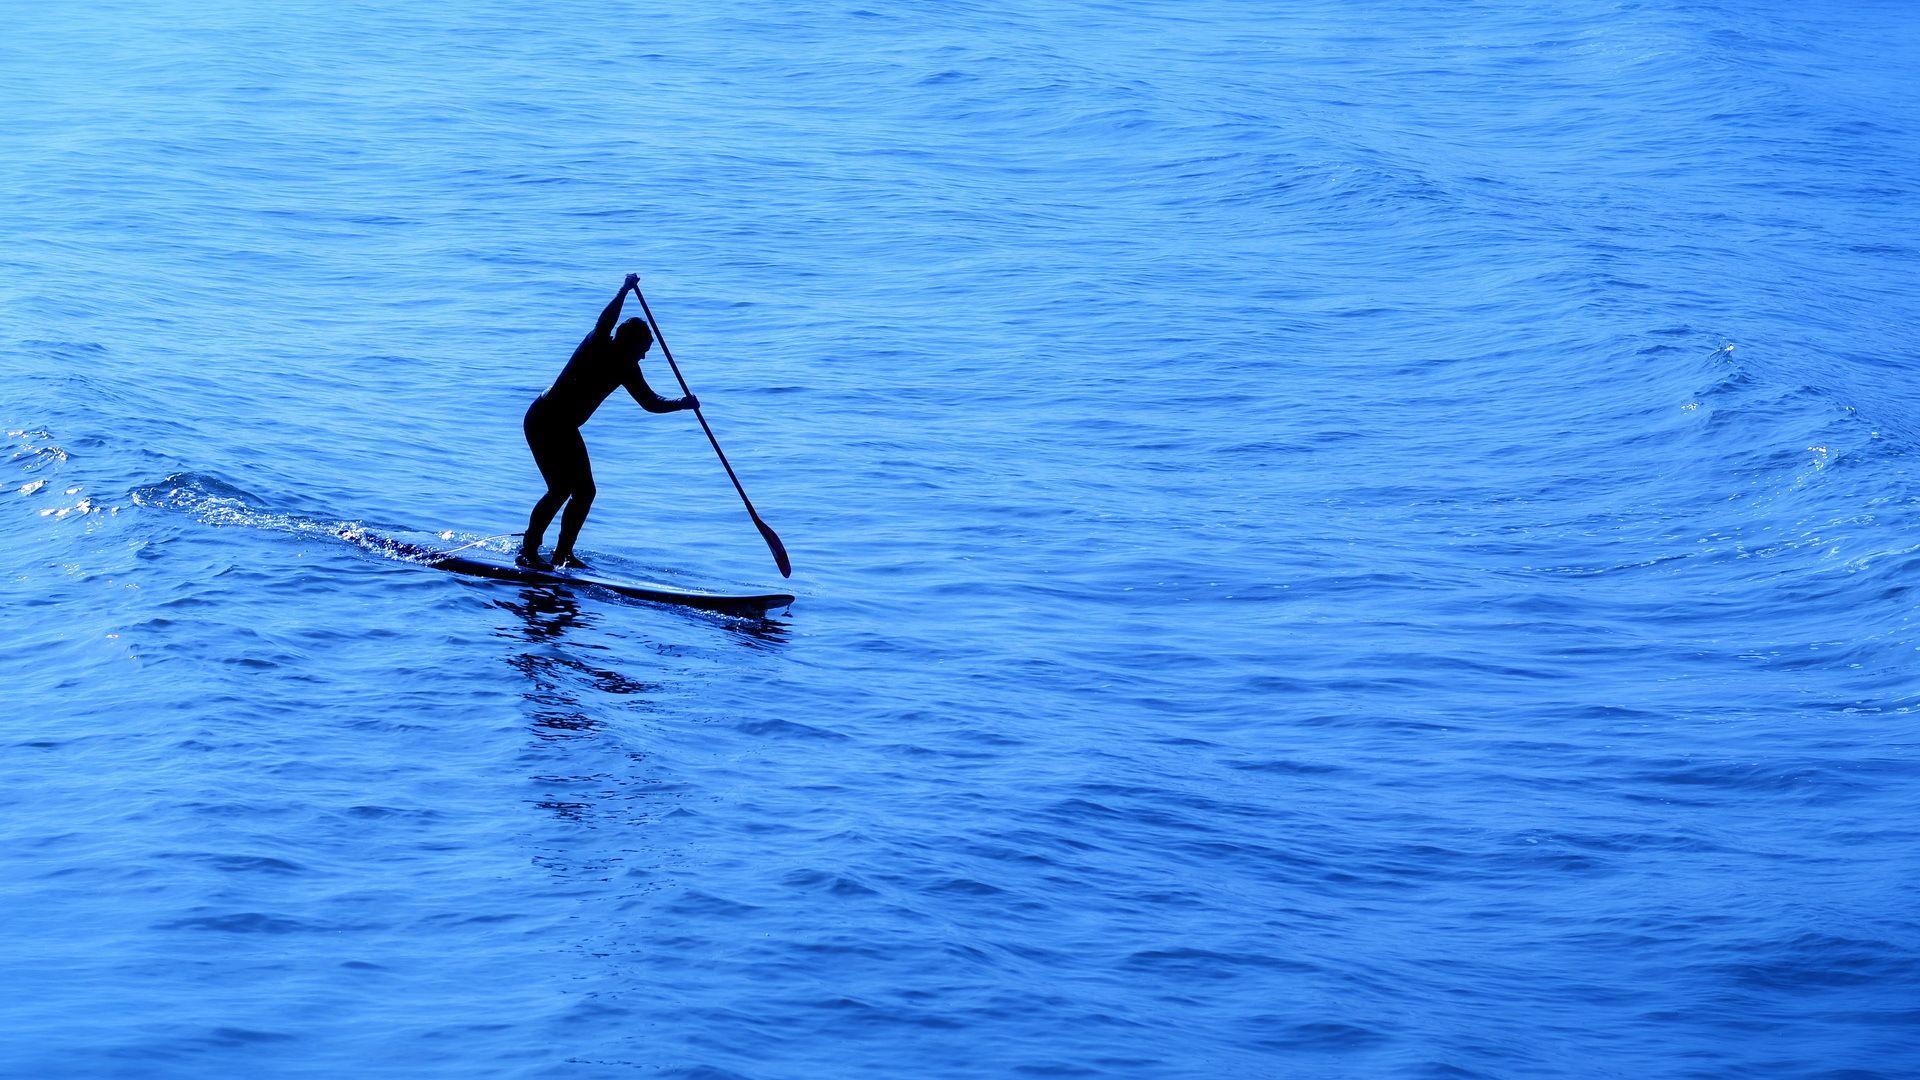 Ocean SUP Surfing full HD wallpaper Paddleboarding. SUP